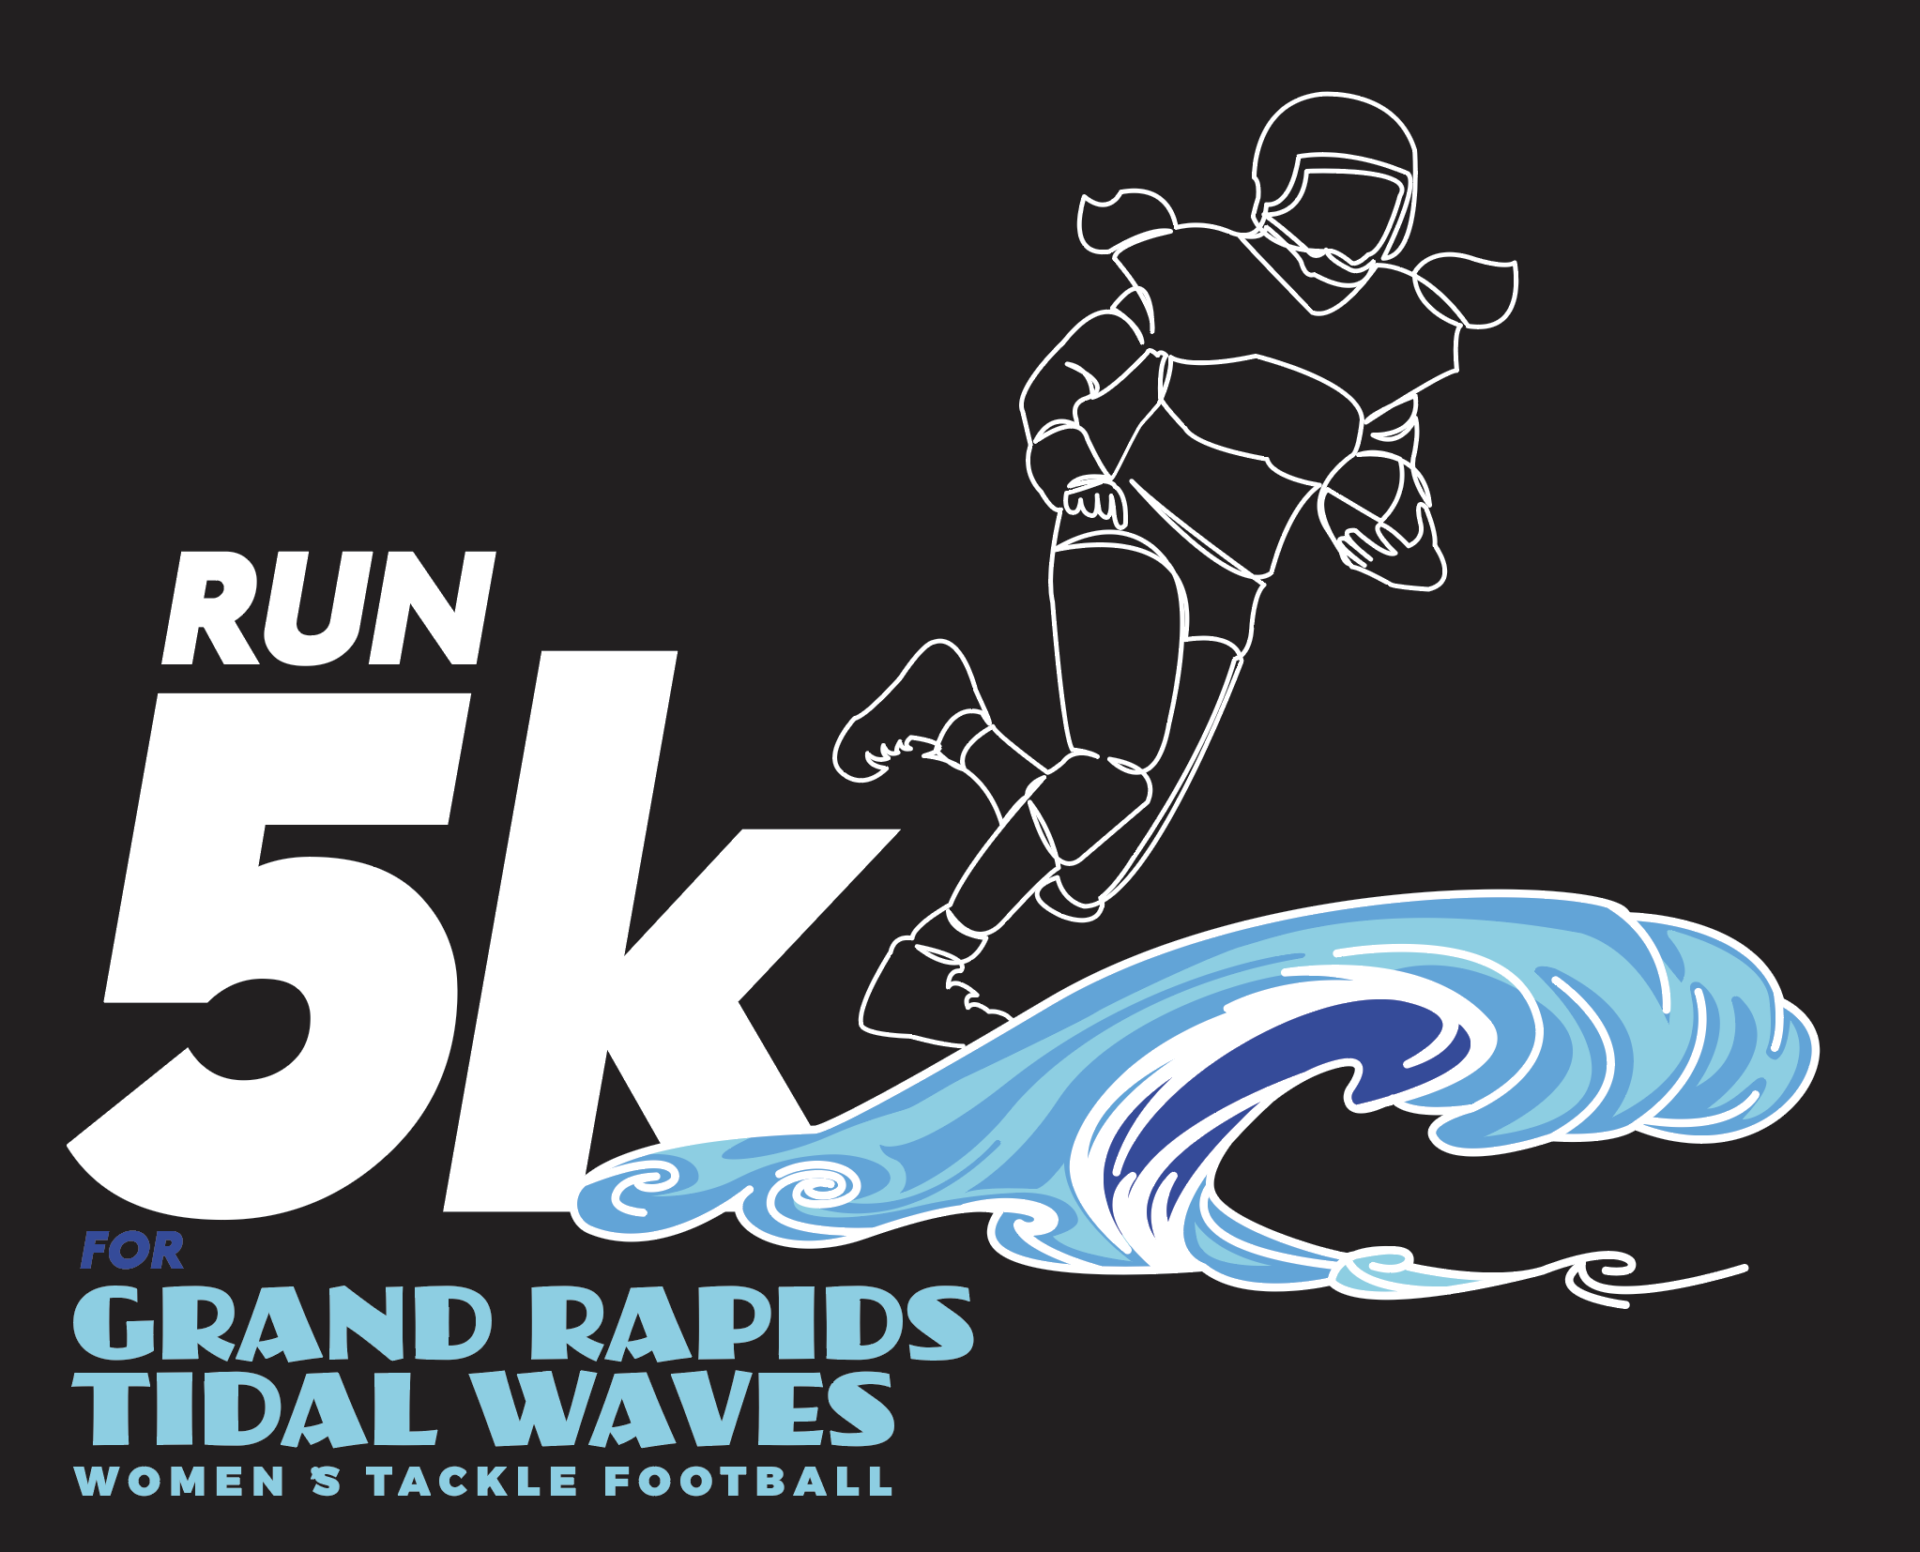 Run for the Waves! Women's Football 5K Grand Rapids Tidal Waves